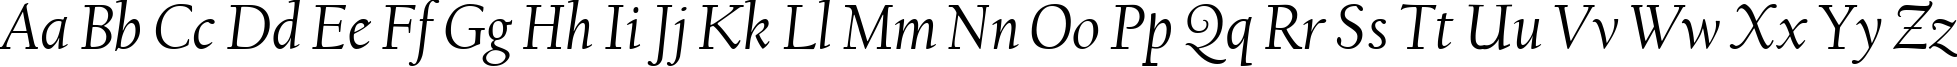 Пример написания английского алфавита шрифтом Californian FB Italic